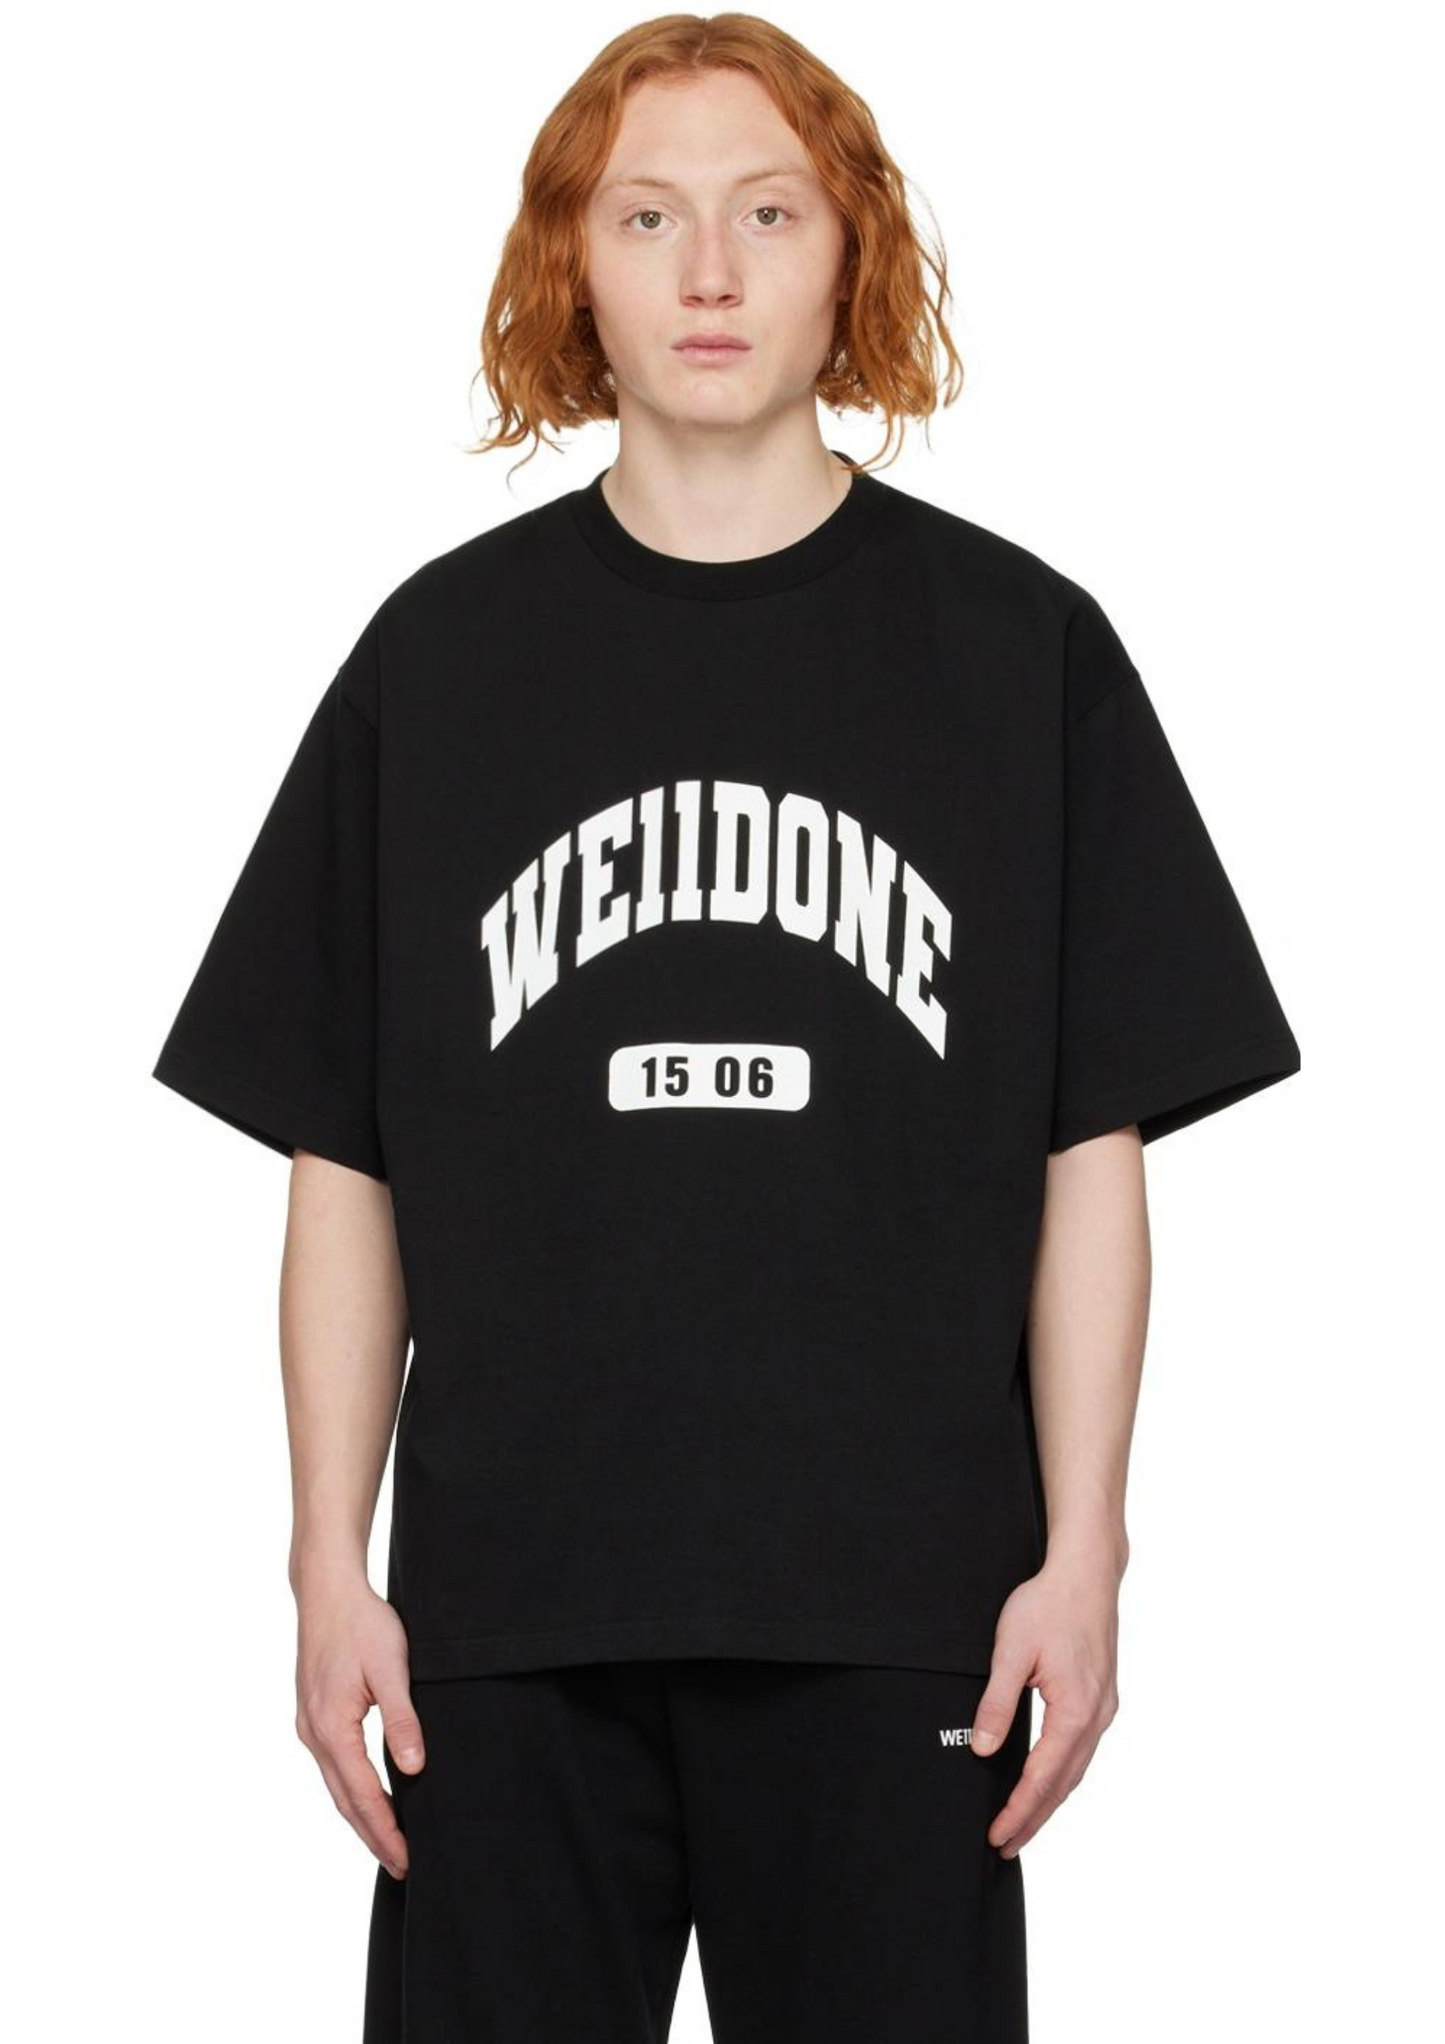 WE11DONE FW22 Printed T-Shirt (Black)